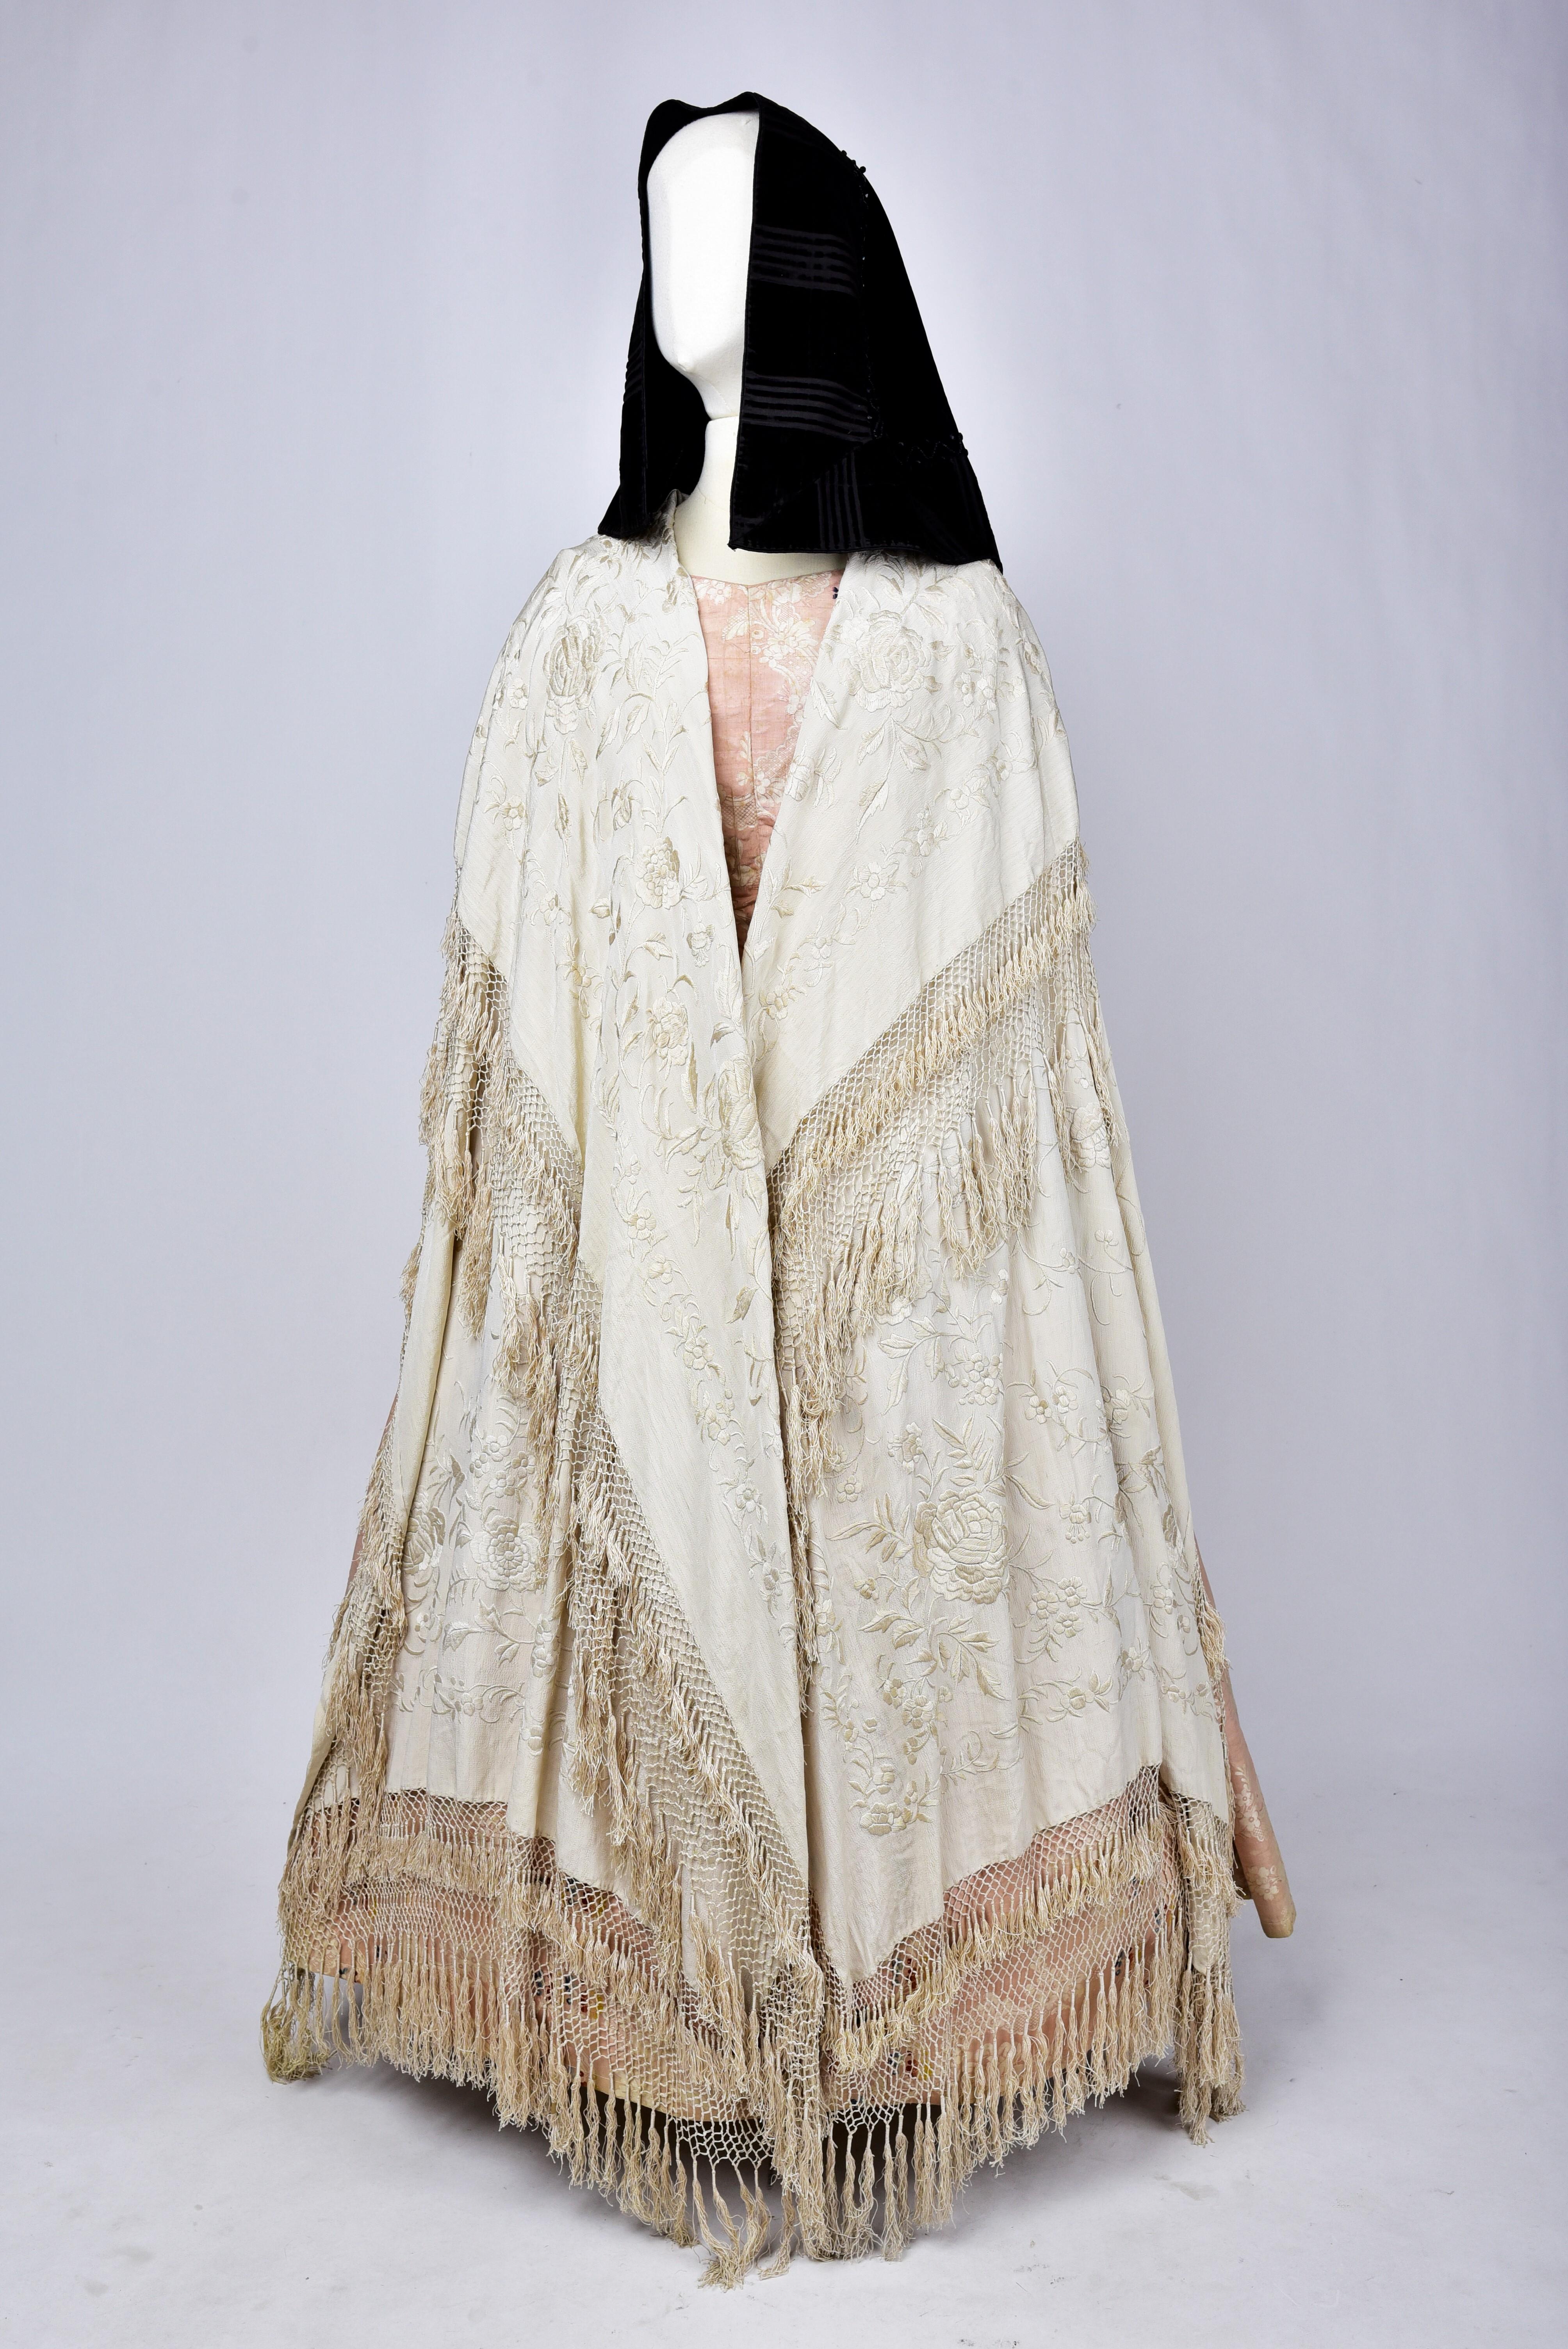 Ceremonial Crinoline Dress, Mantilla and Manilla Shawl - Spain Circa 1860 2